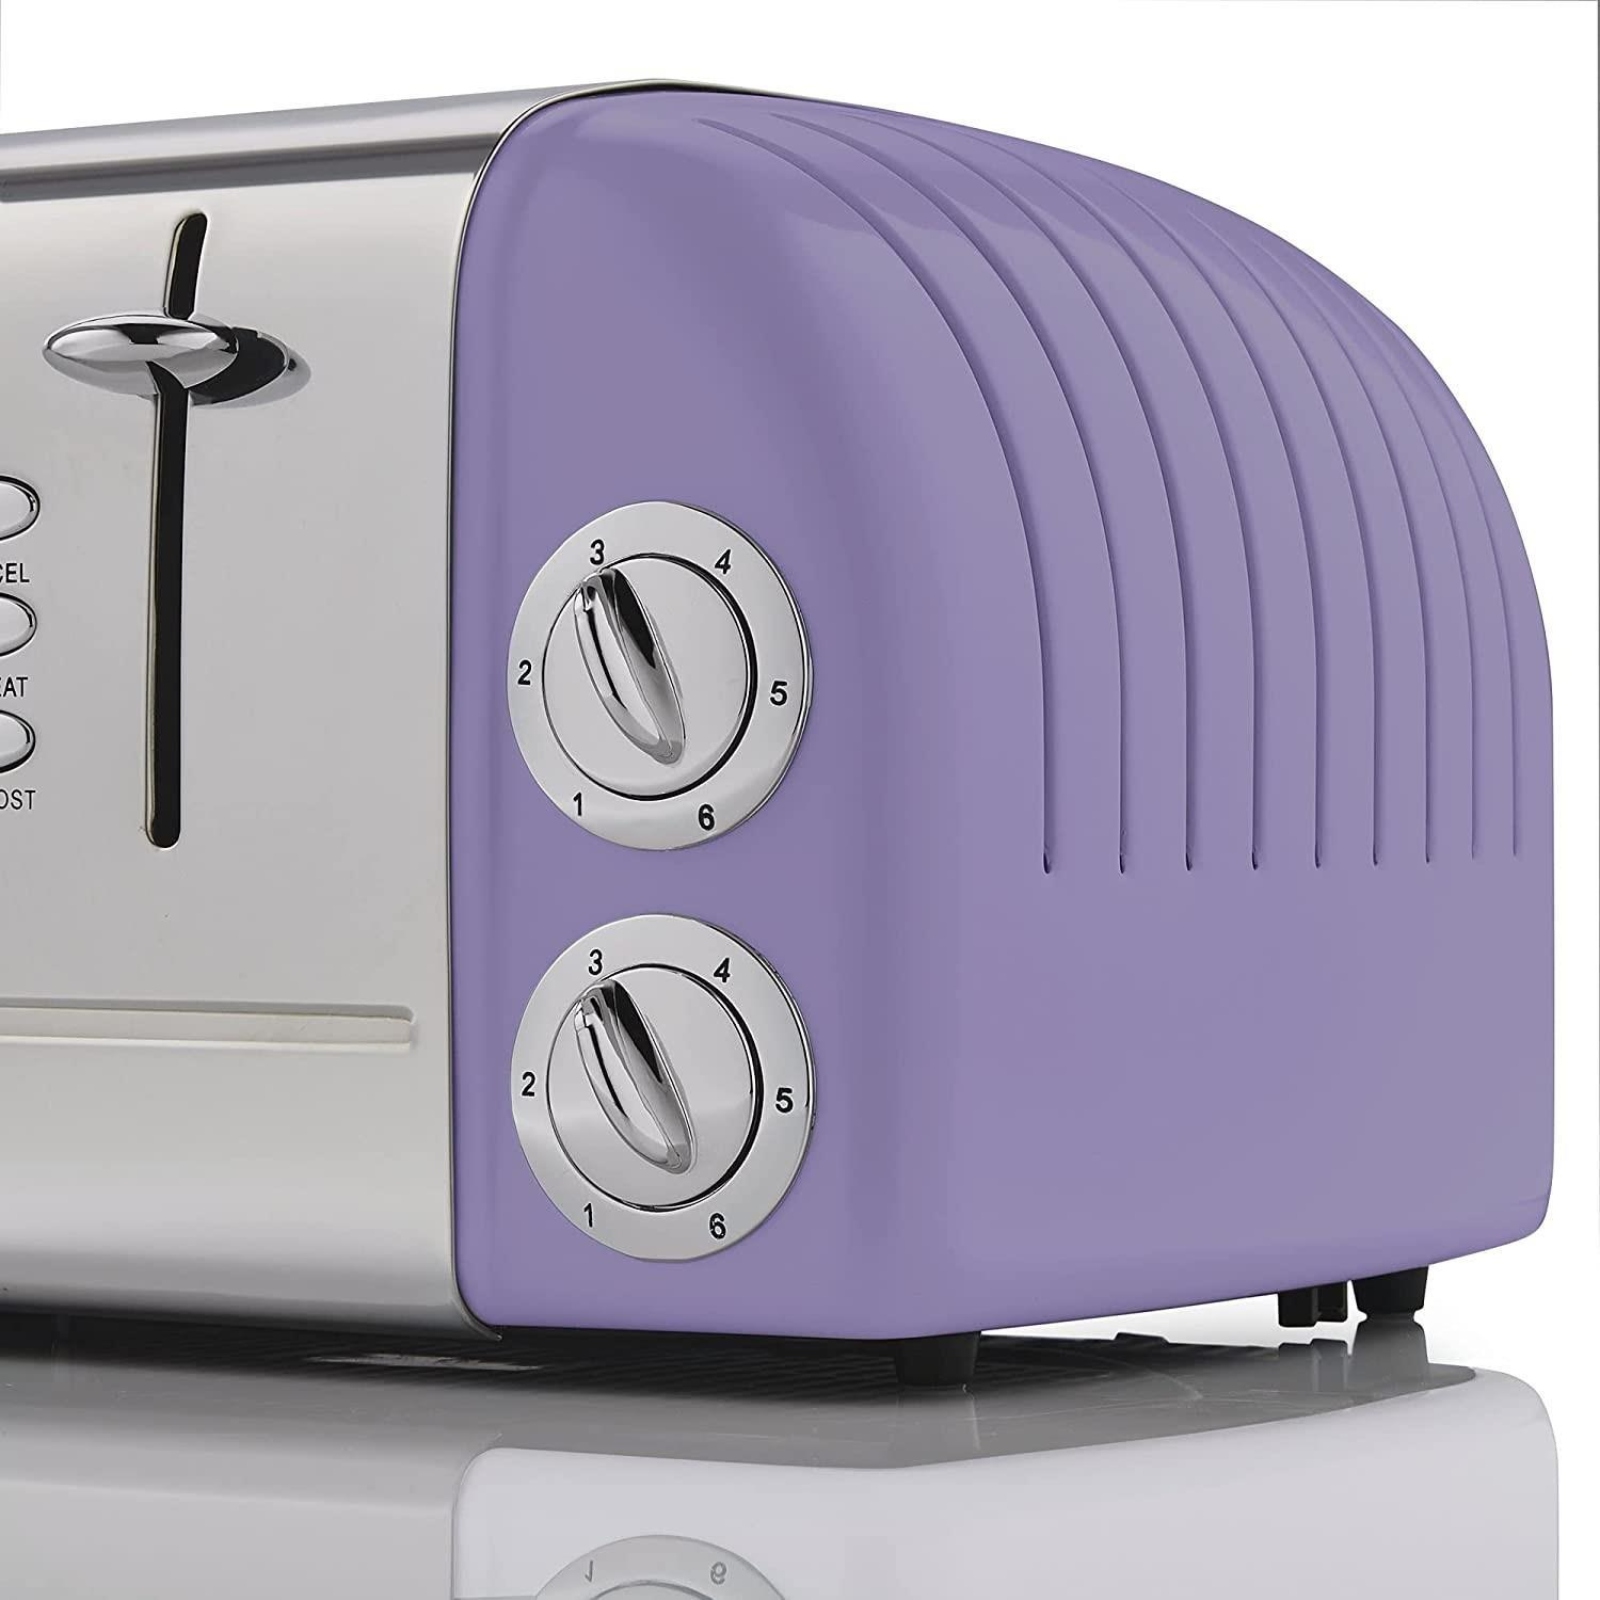 Swan Retro Toaster - 2 Slices - Purple